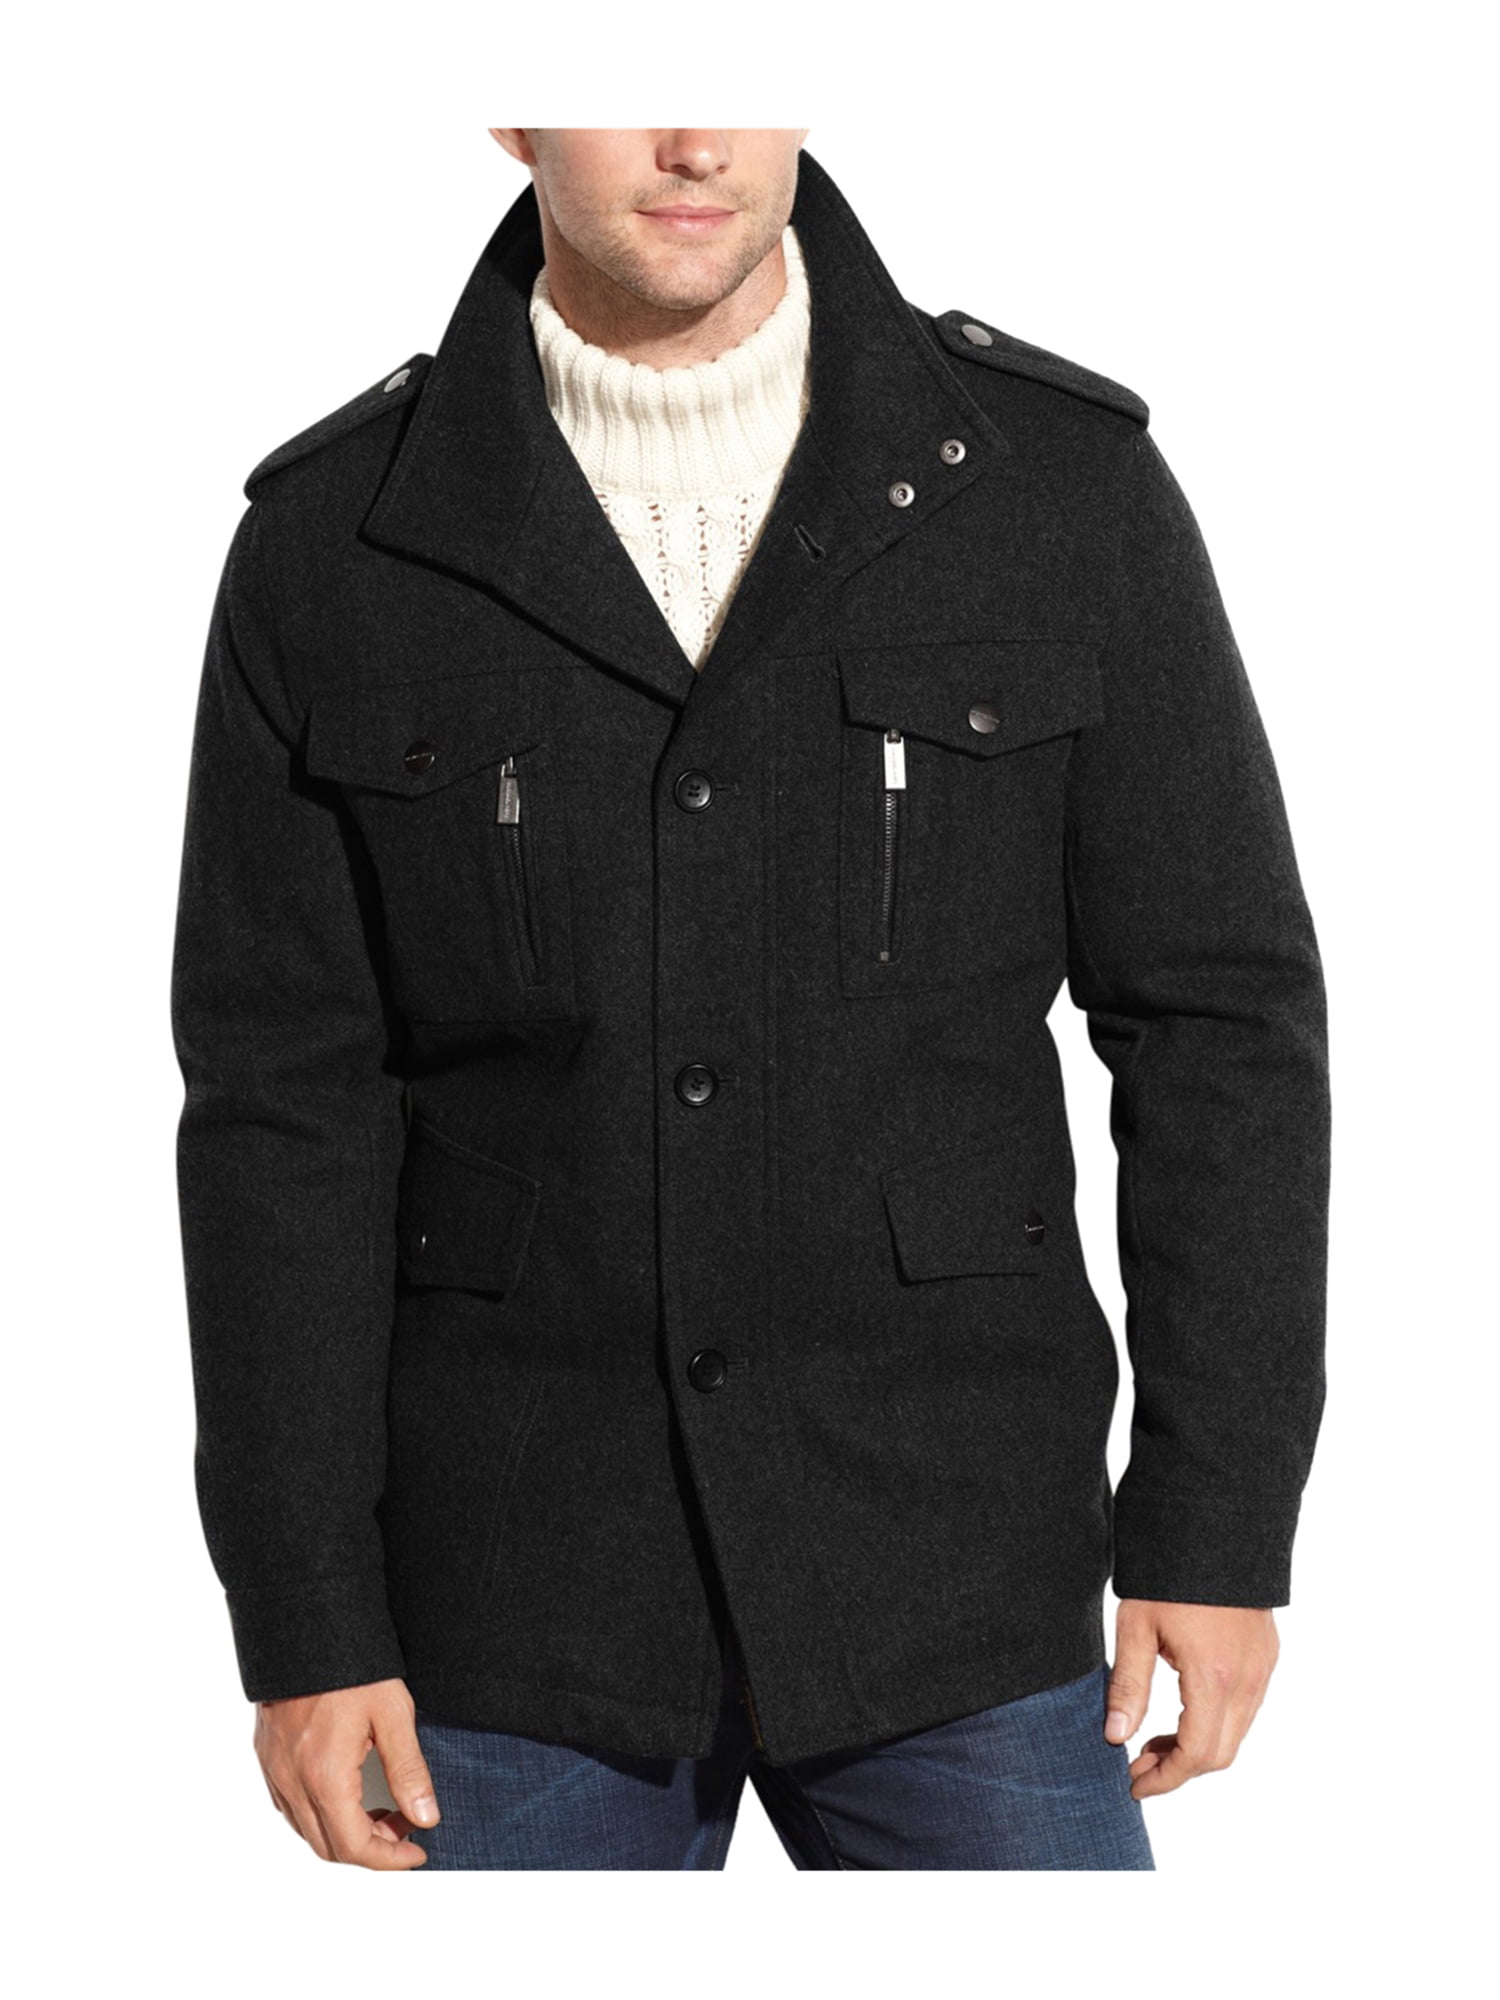 Michael Kors Mens Wool Blend Pea Coat black 3XL